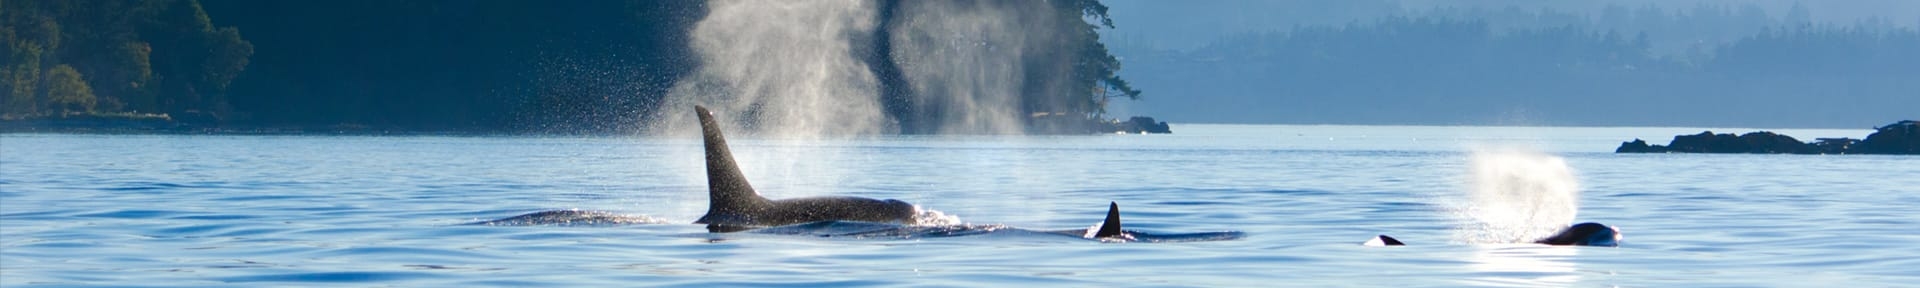 orca whales near Vancouver island Victoria British Columbia